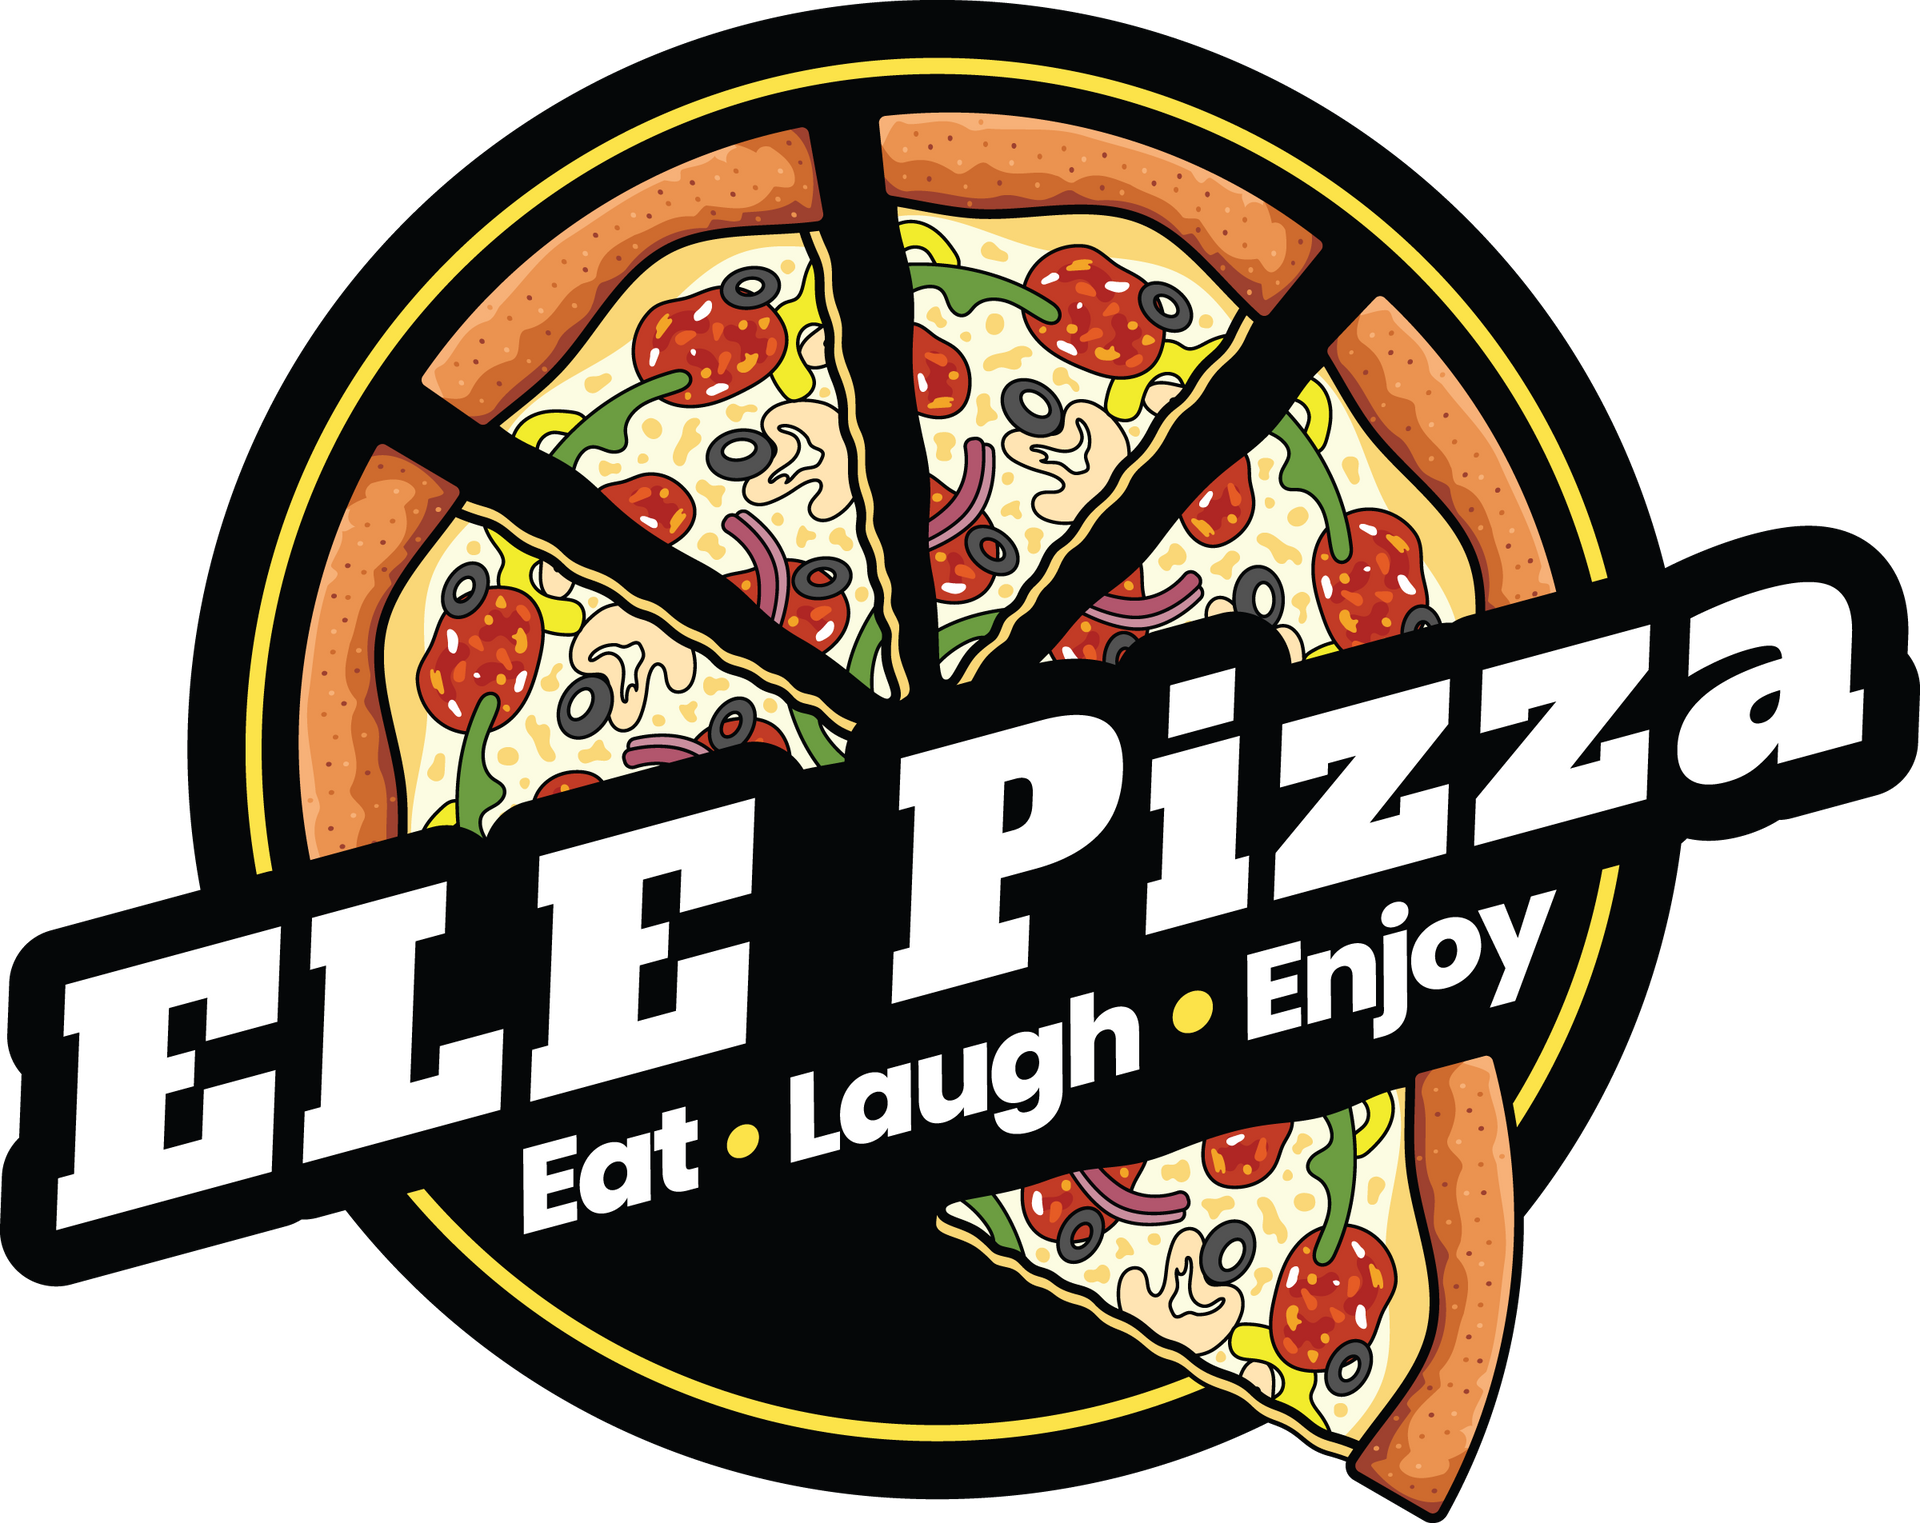 A logo for ele pizza that says eat laugh enjoy